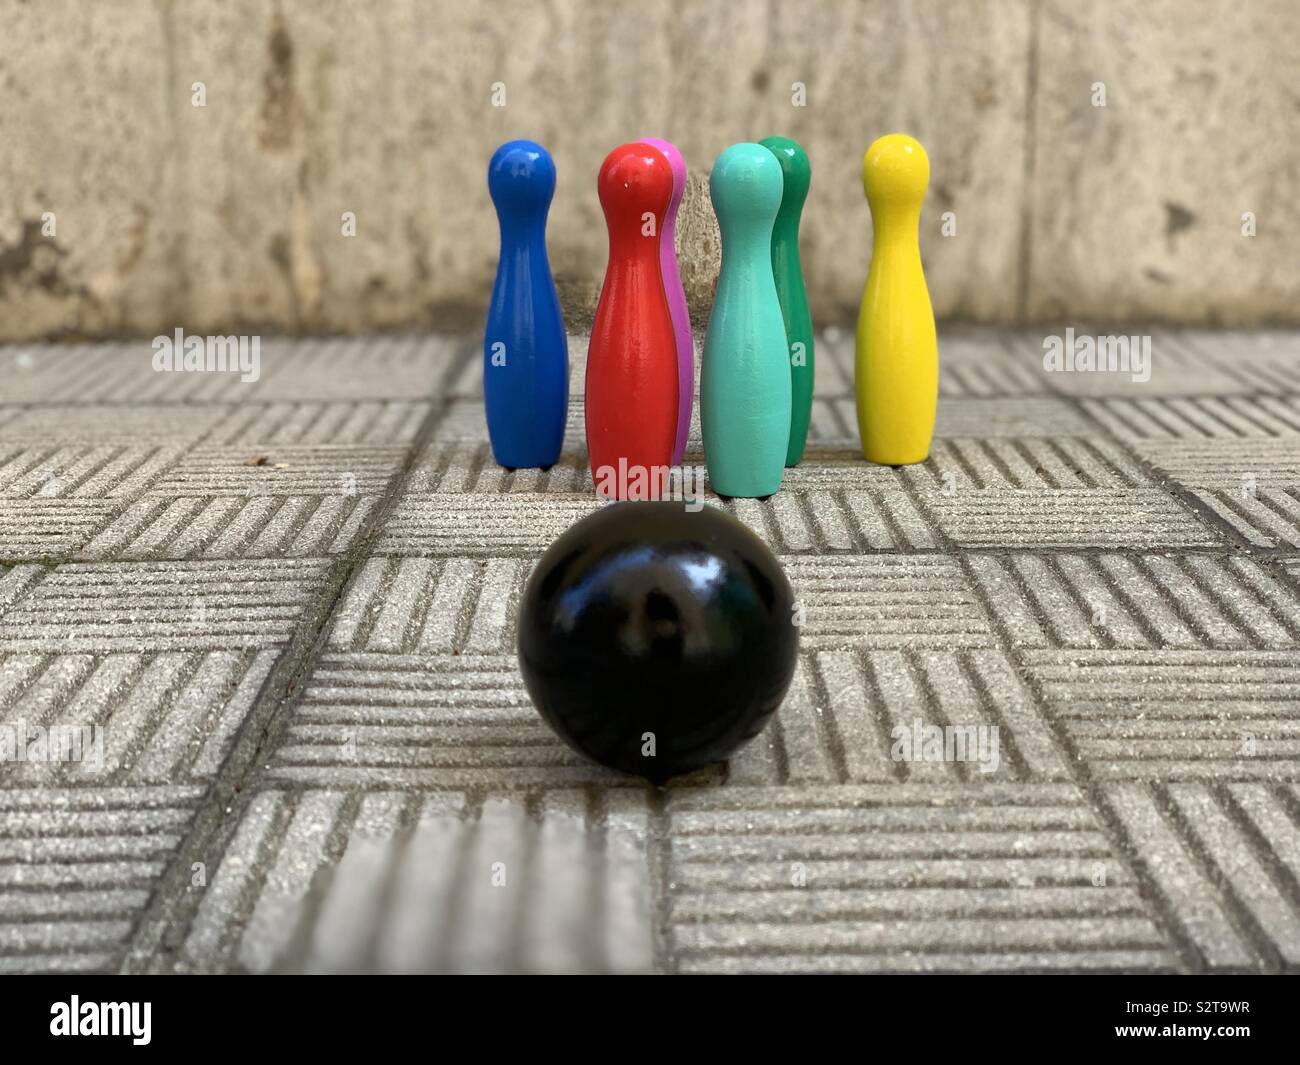 Bowling Spiel mit bunten Bowling Pins Stockfoto